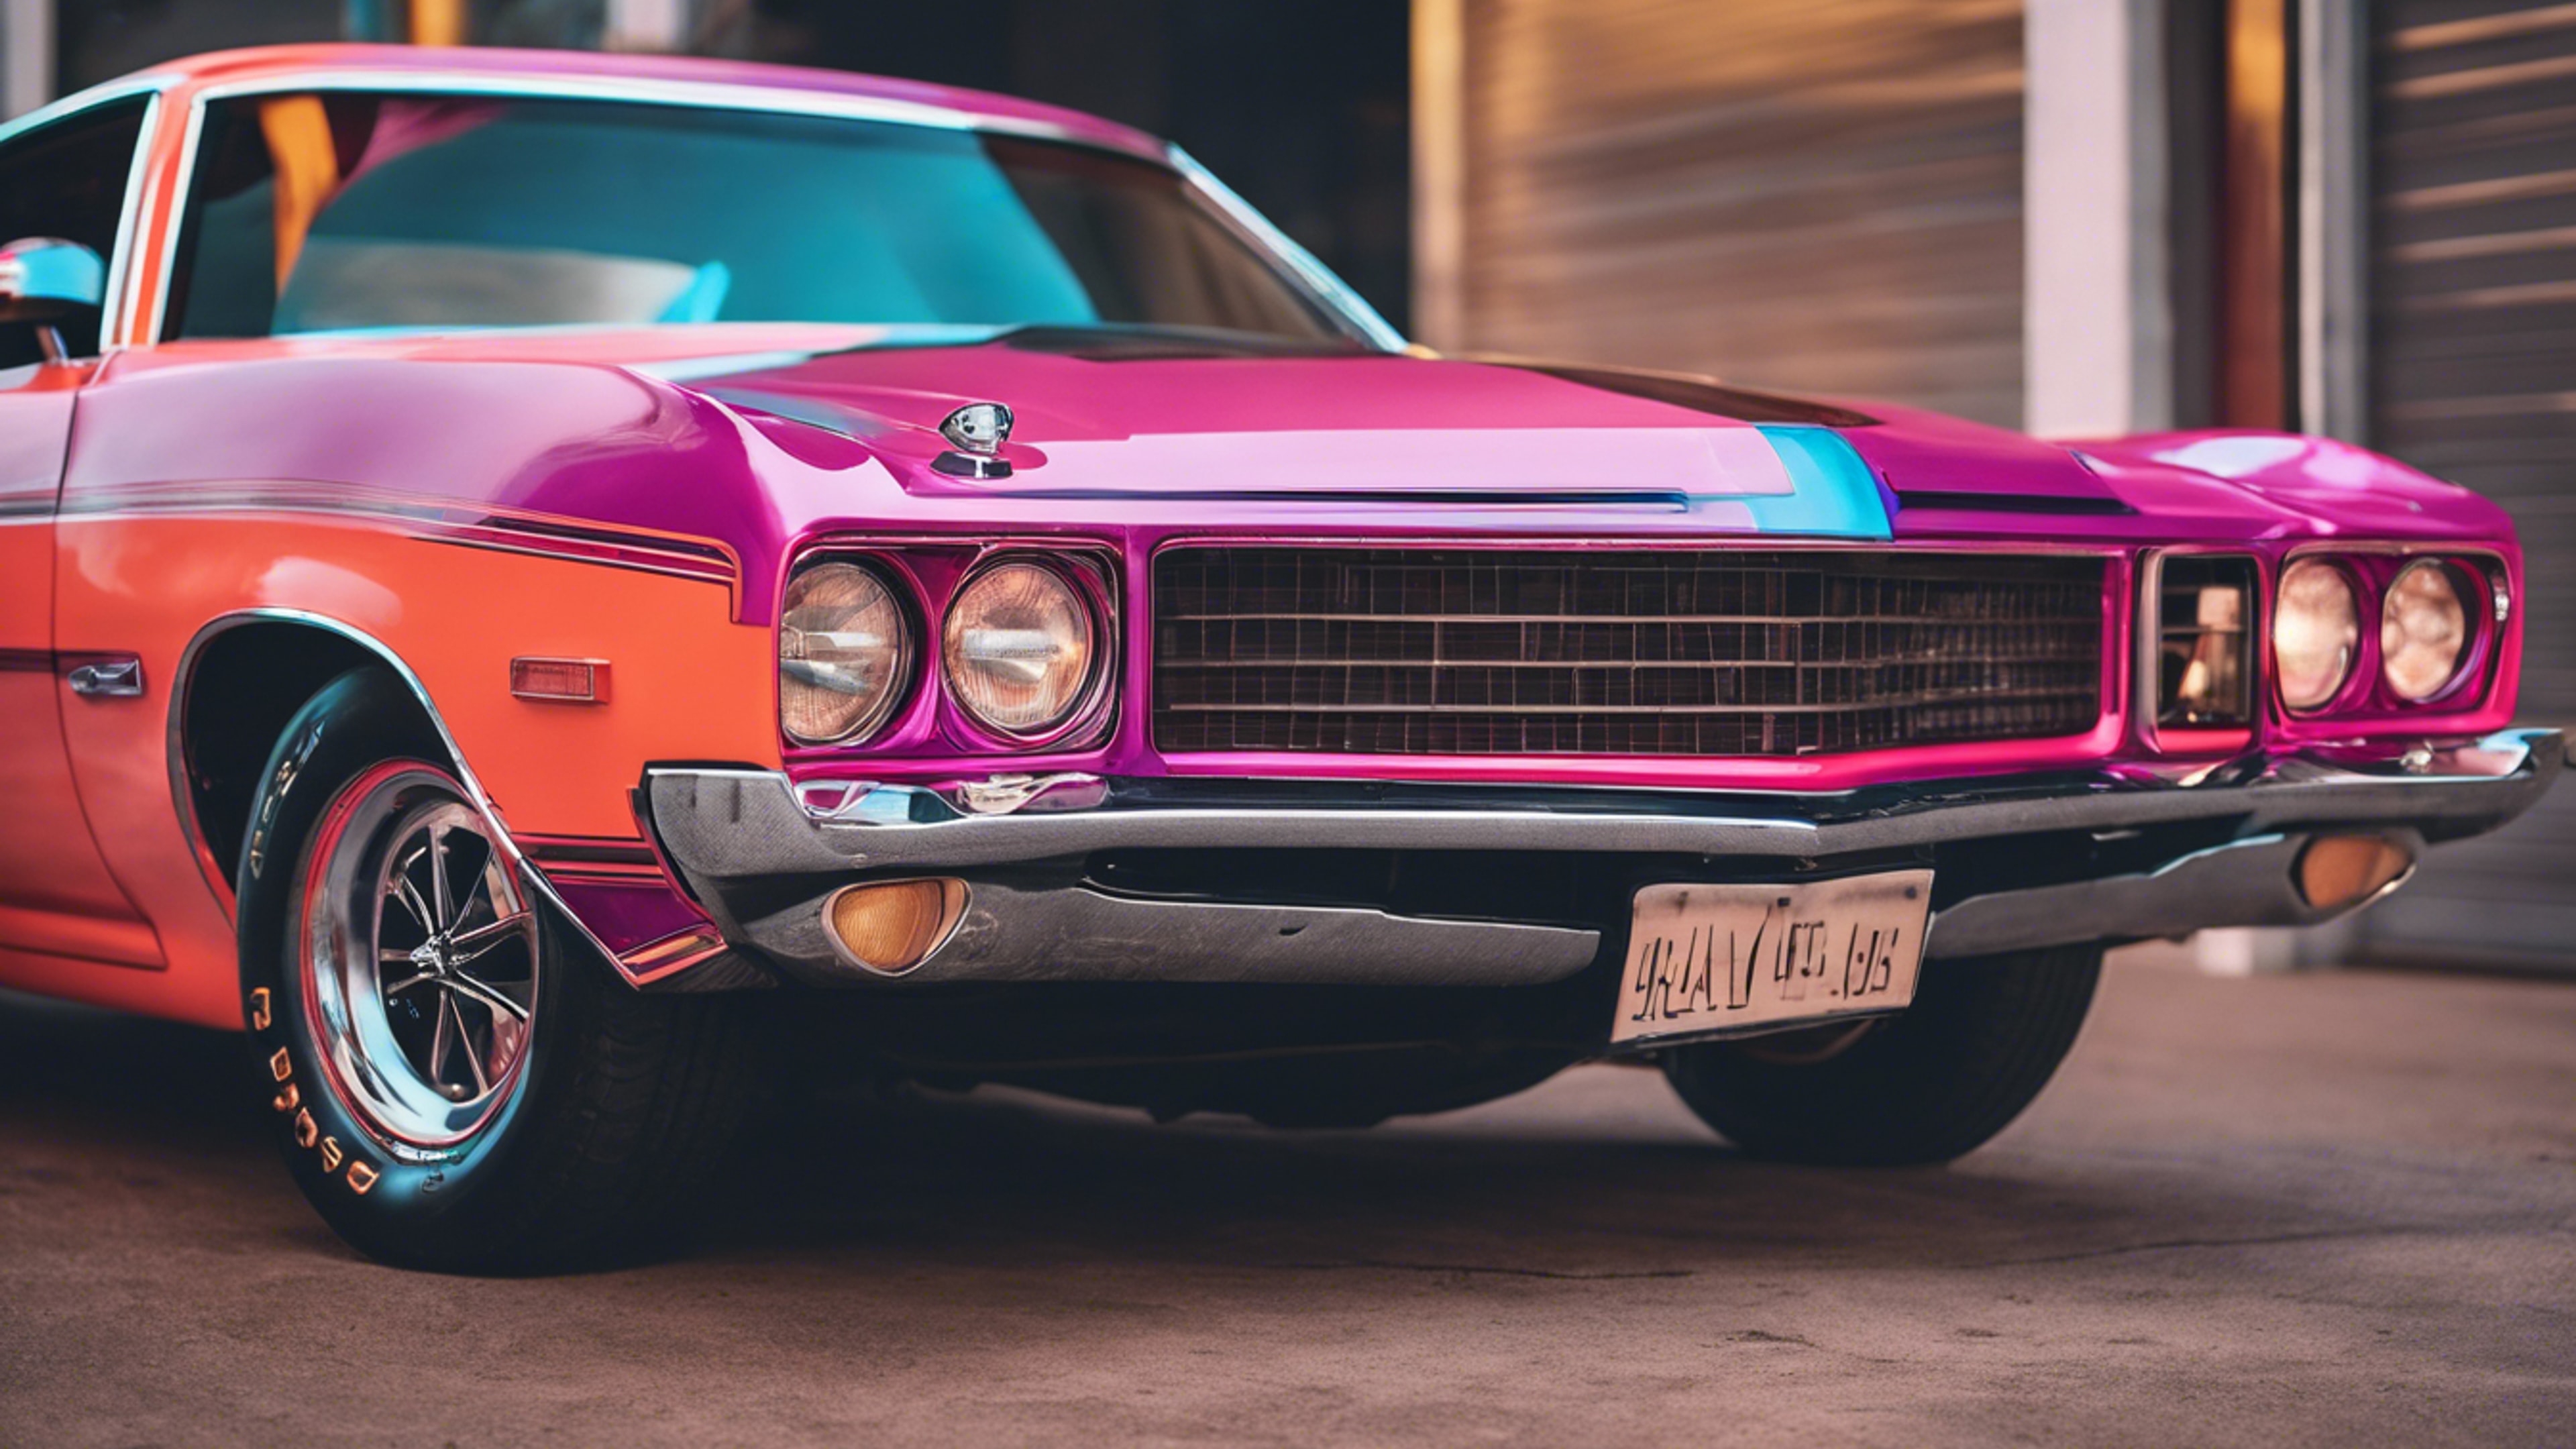 A classic American muscle car from the 1970s, printed in bright neon colors Ταπετσαρία[fa60d4cf89e348ffade4]